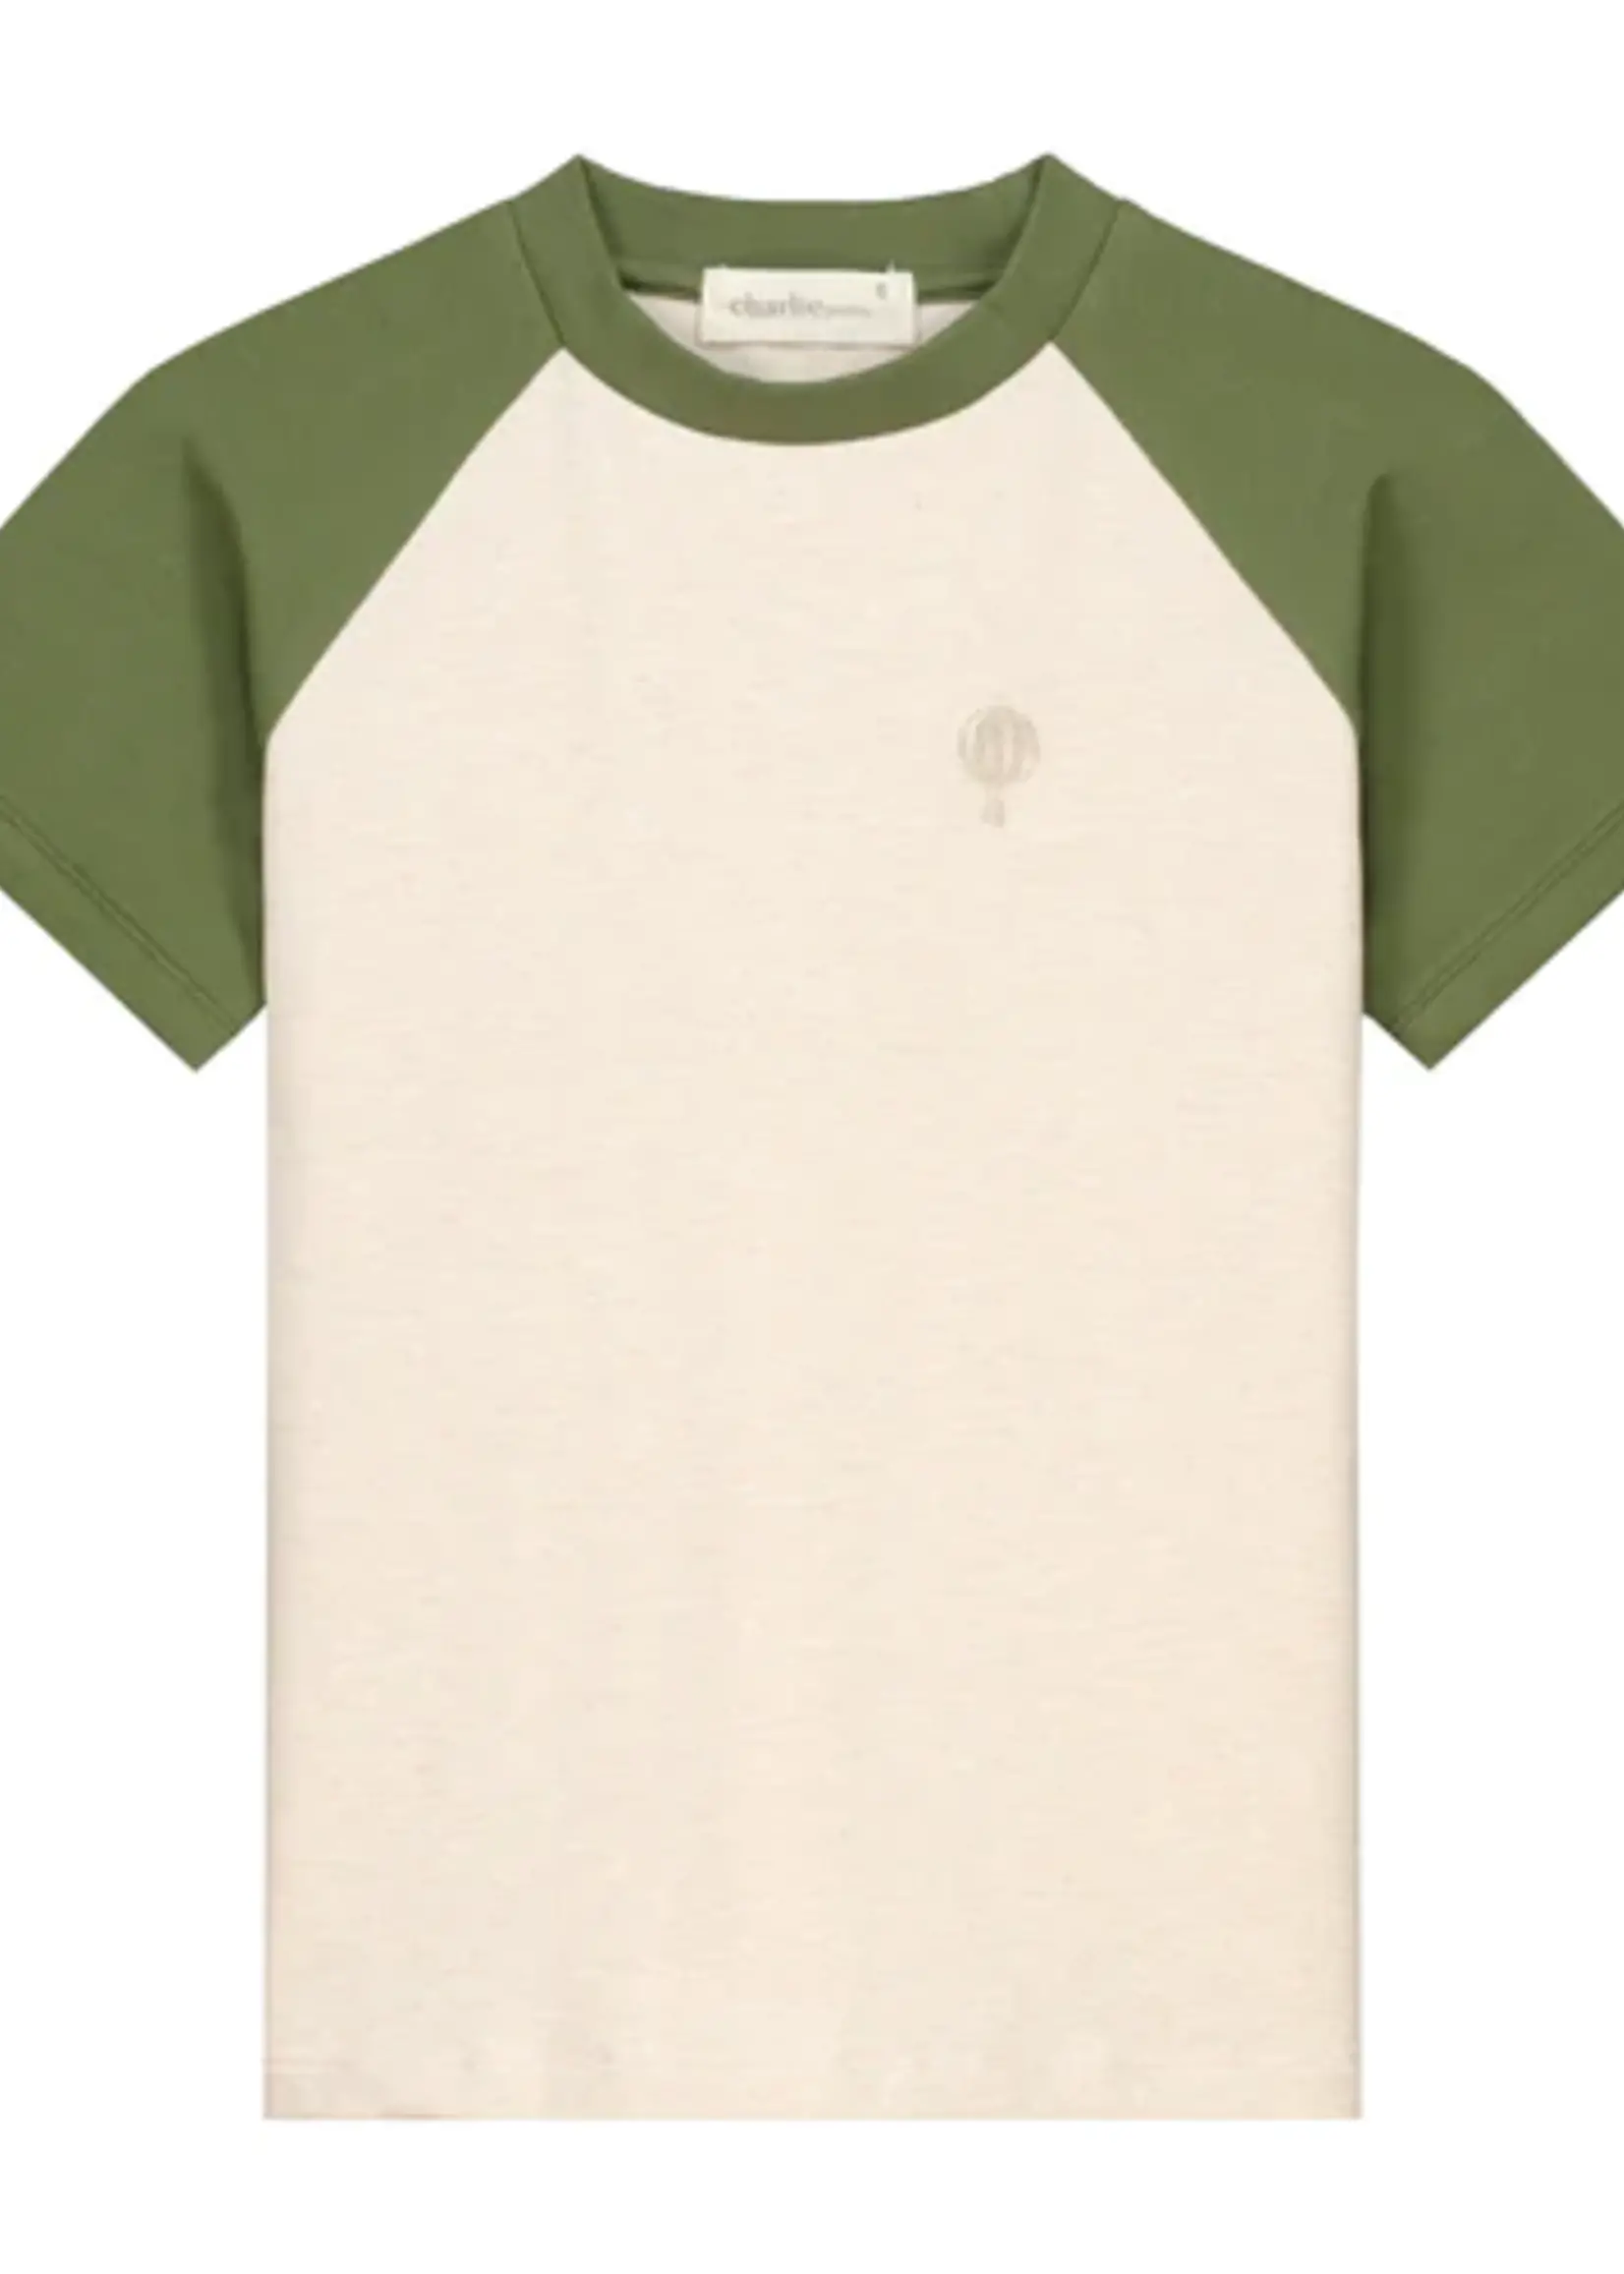 Charlie Petite Iven raglan t-shirt - Charlie Petite